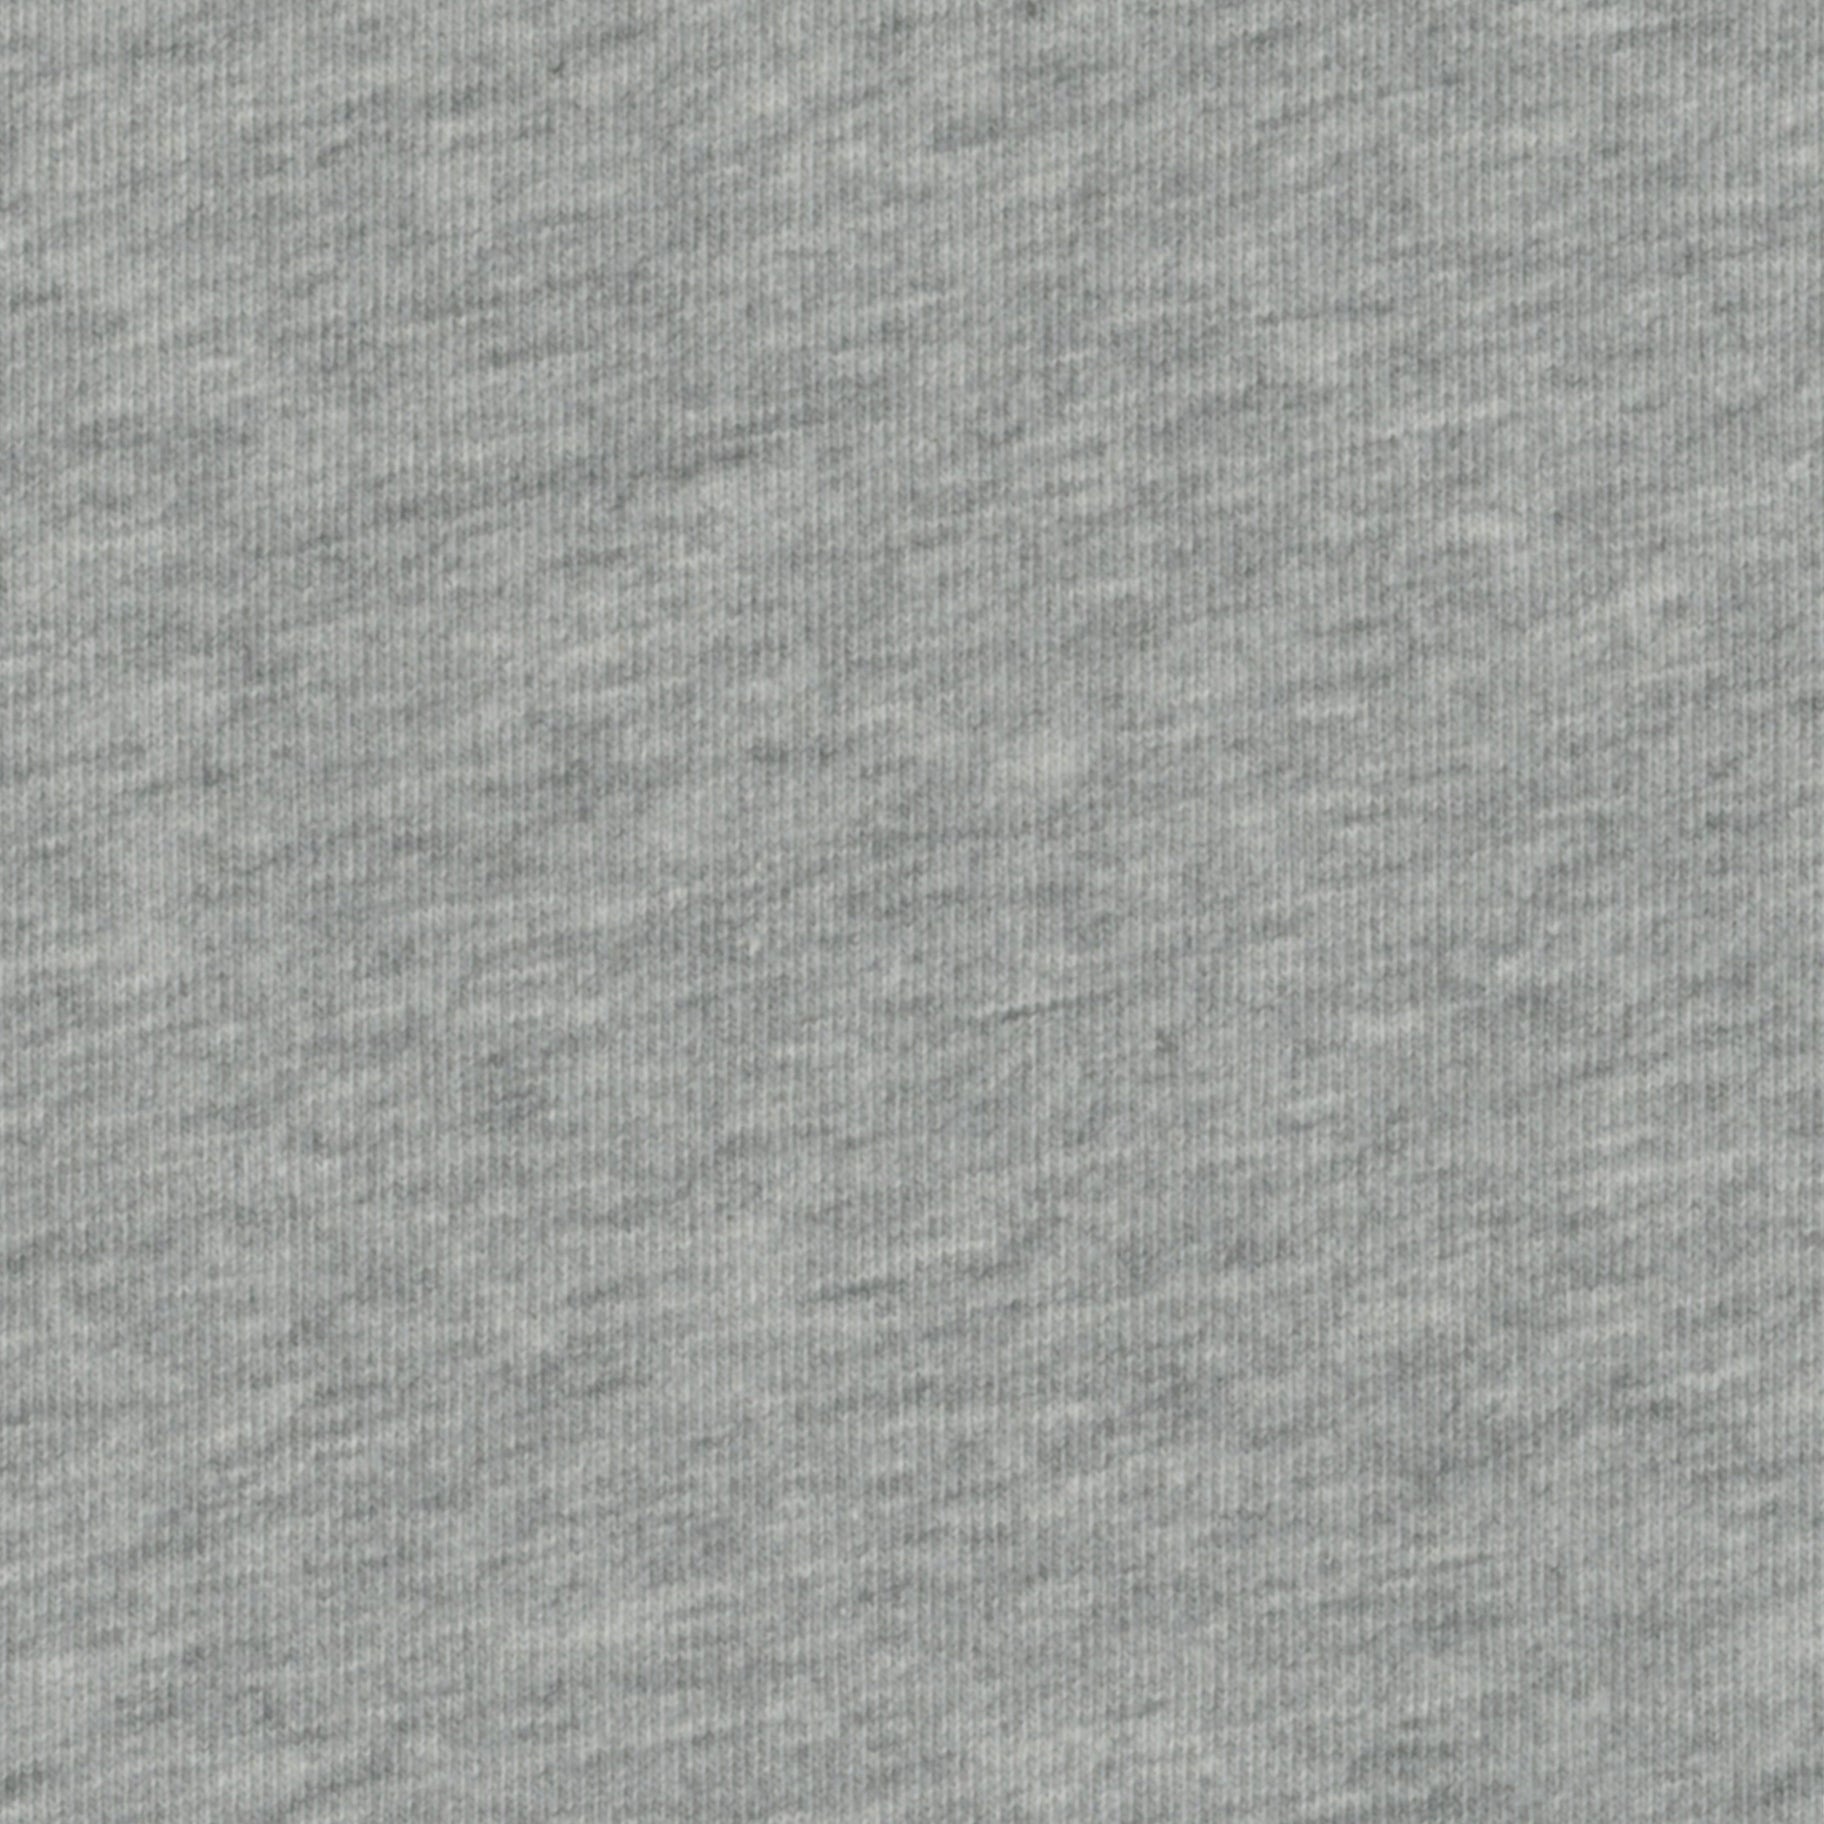 95% Organic Cotton - 5% Elastane Single Jersey- Grey Melange (2SP081)